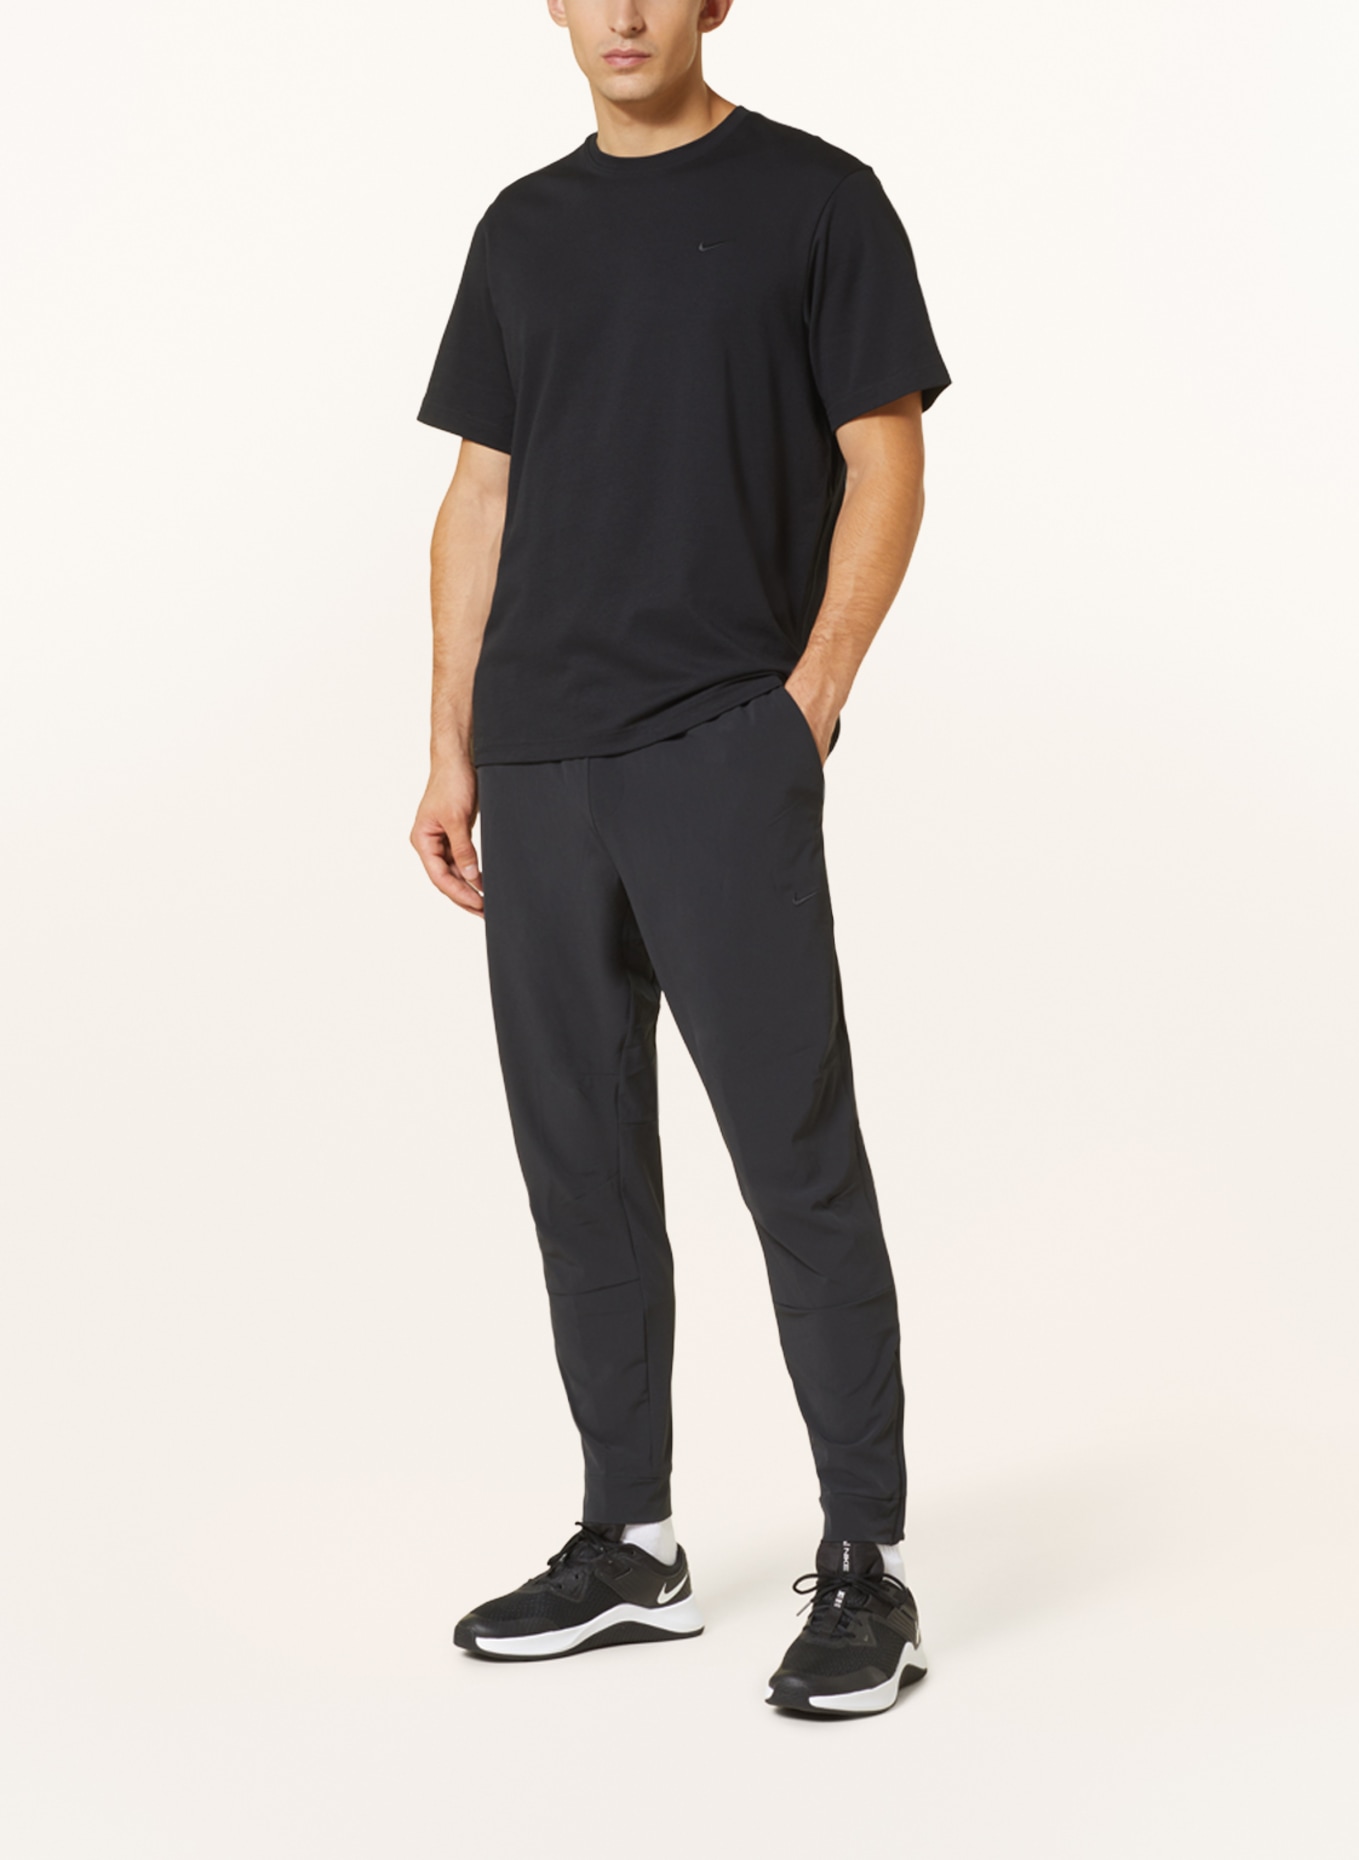 Nike Training pants DRI-FIT UNLIMITED in dark blue